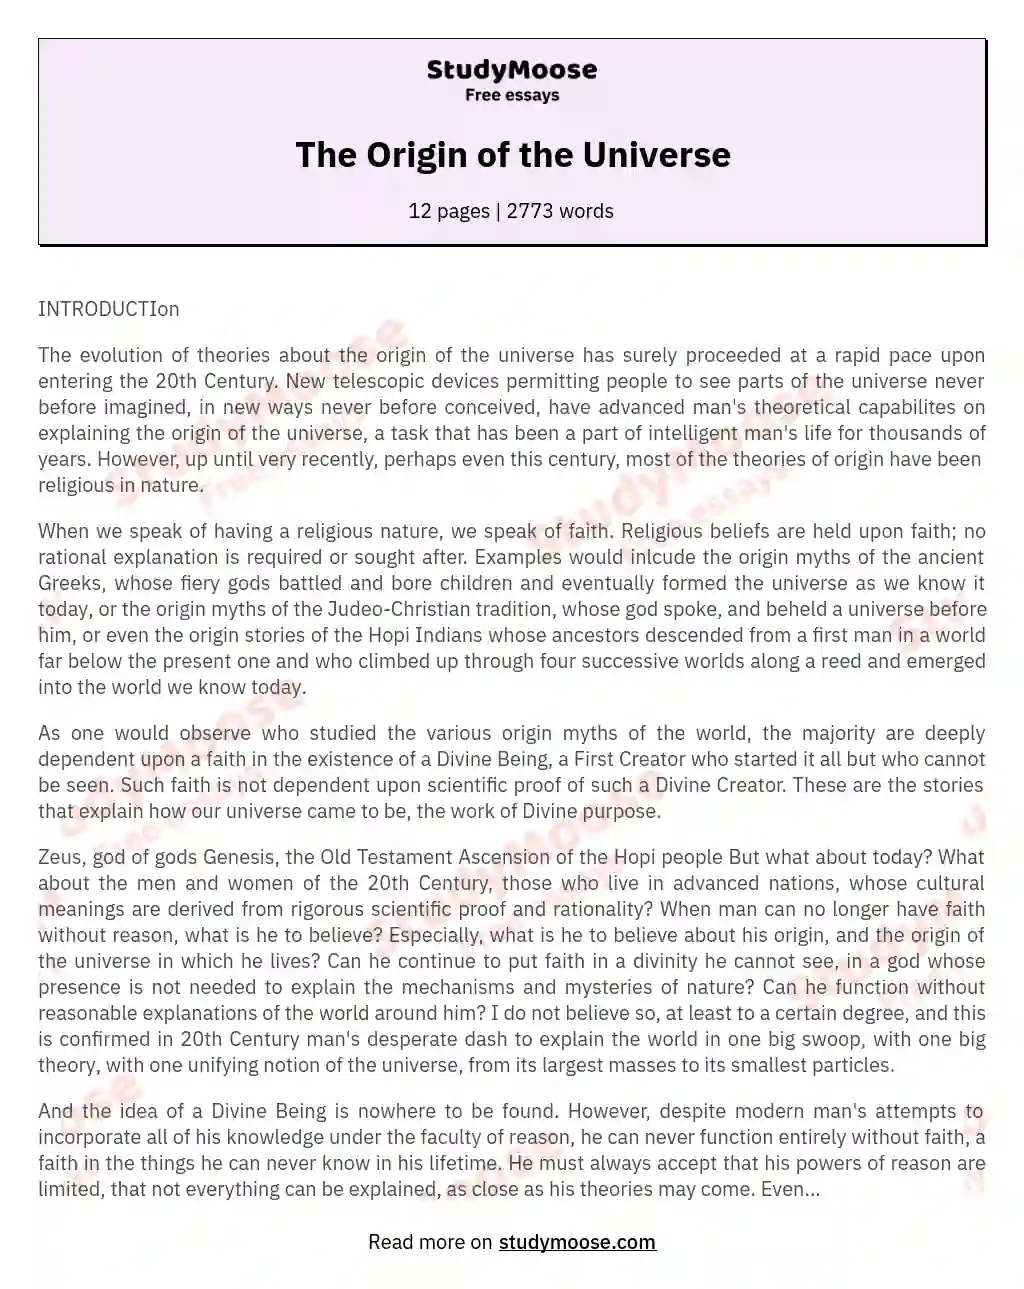 the origin of the universe essay 500 words